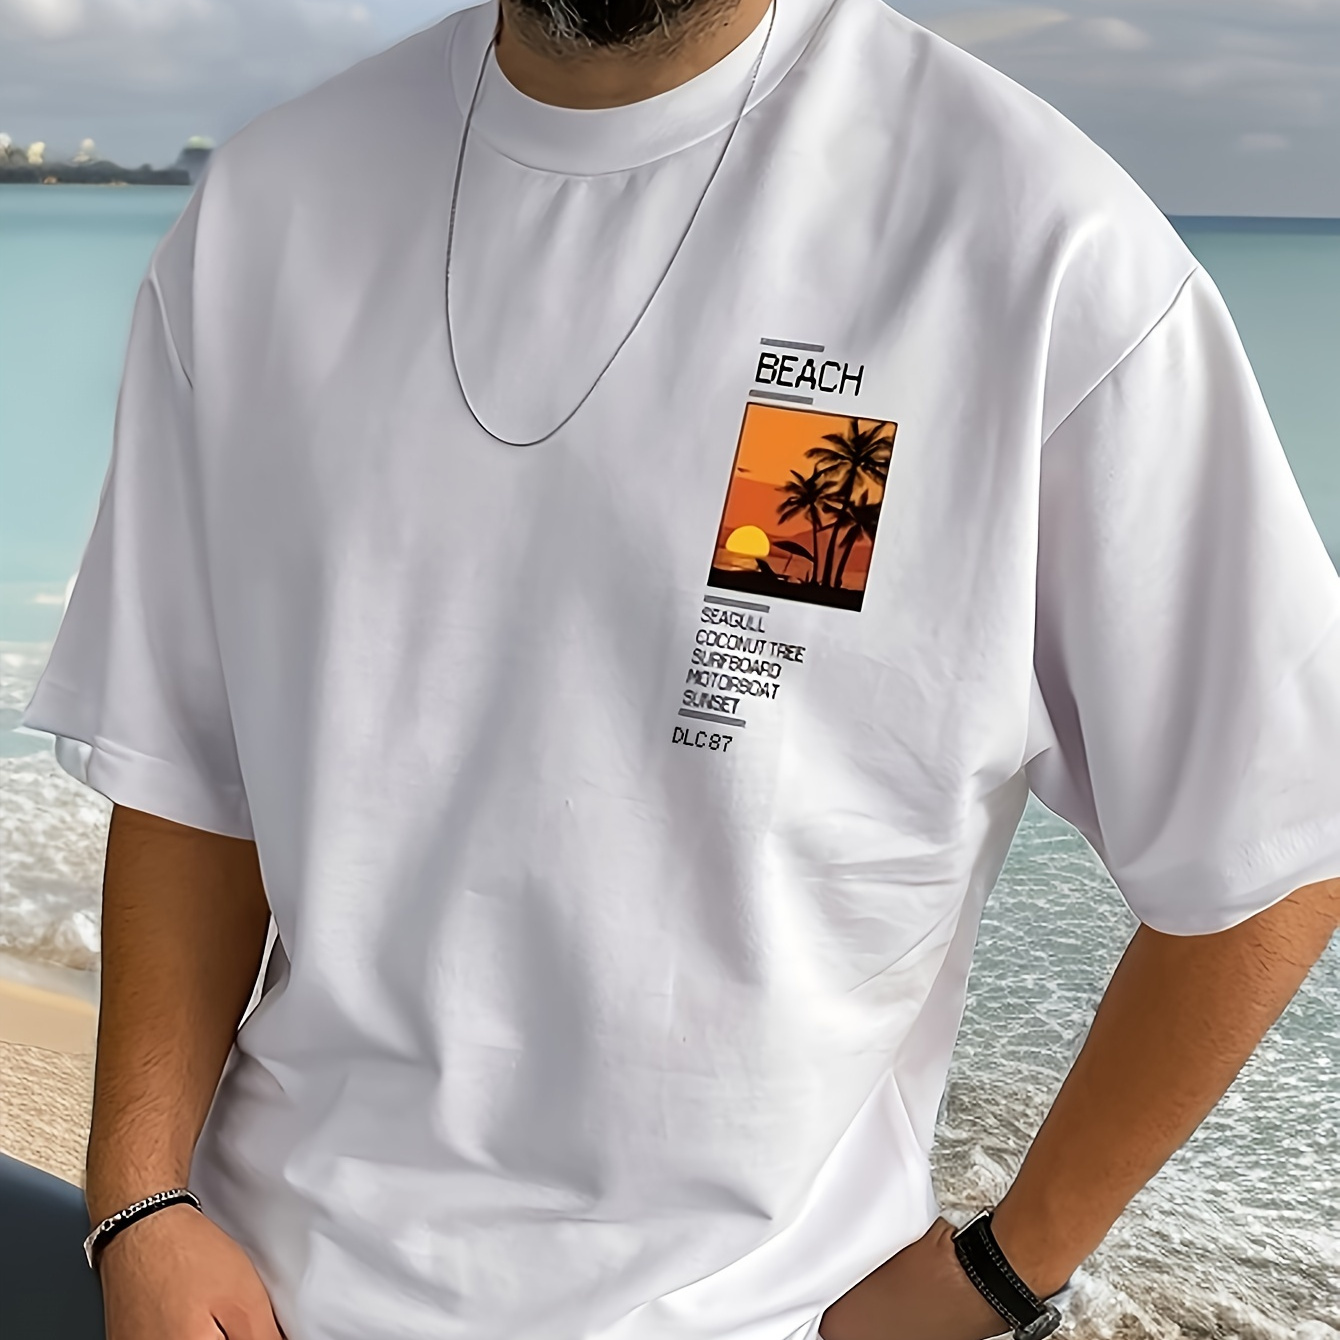 

Beach Print T Shirt, Tees For Men, Casual Short Sleeve T-shirt For Summer